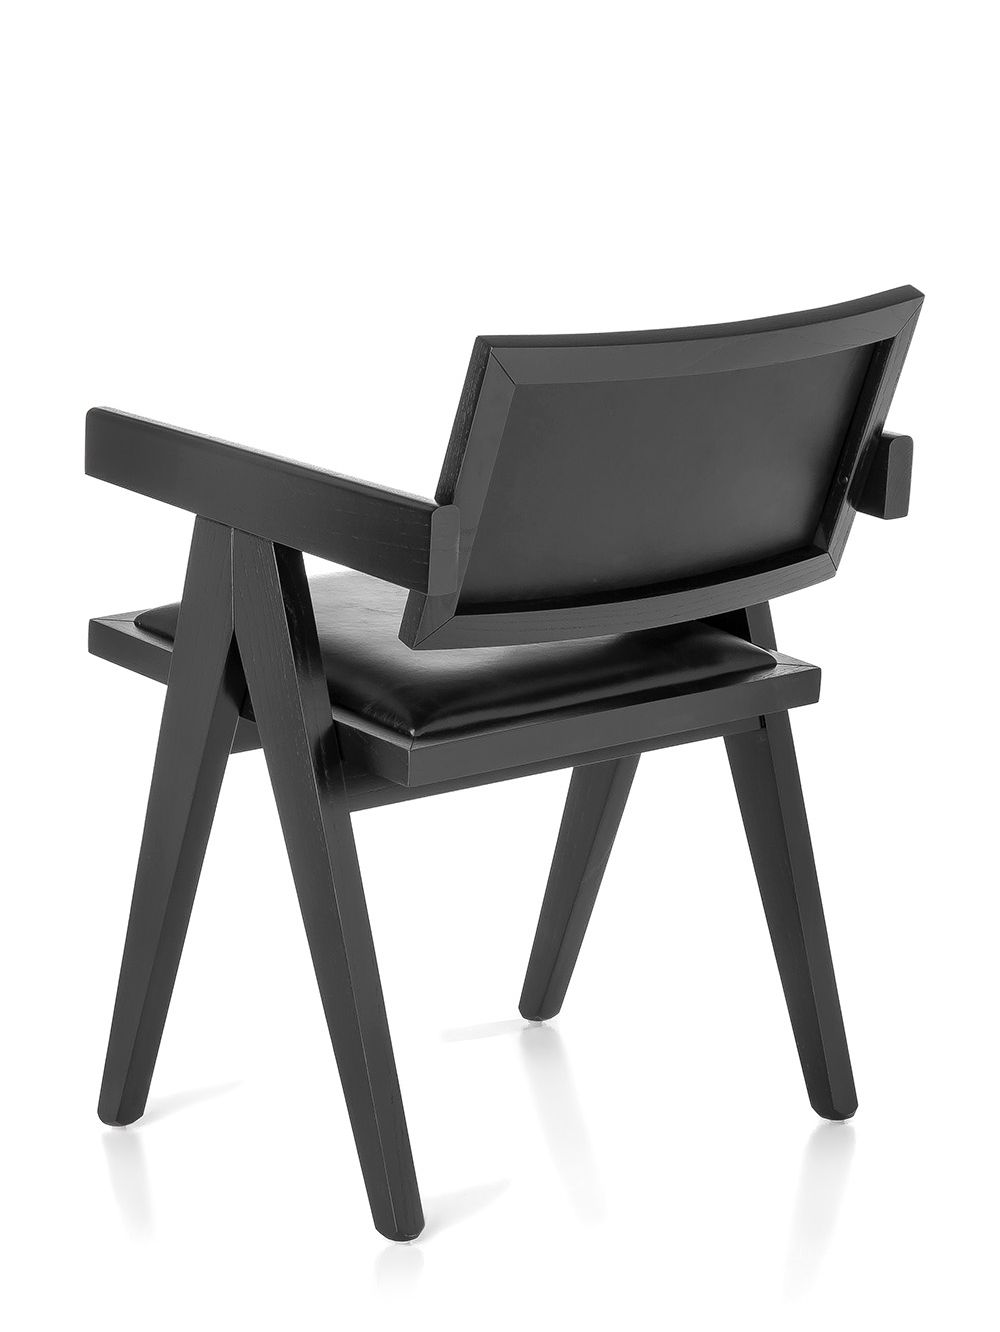 silla-cuero-y-madera-negro-SILLA-CAPITOL-CUERO-NEGRO-FABRICA-3